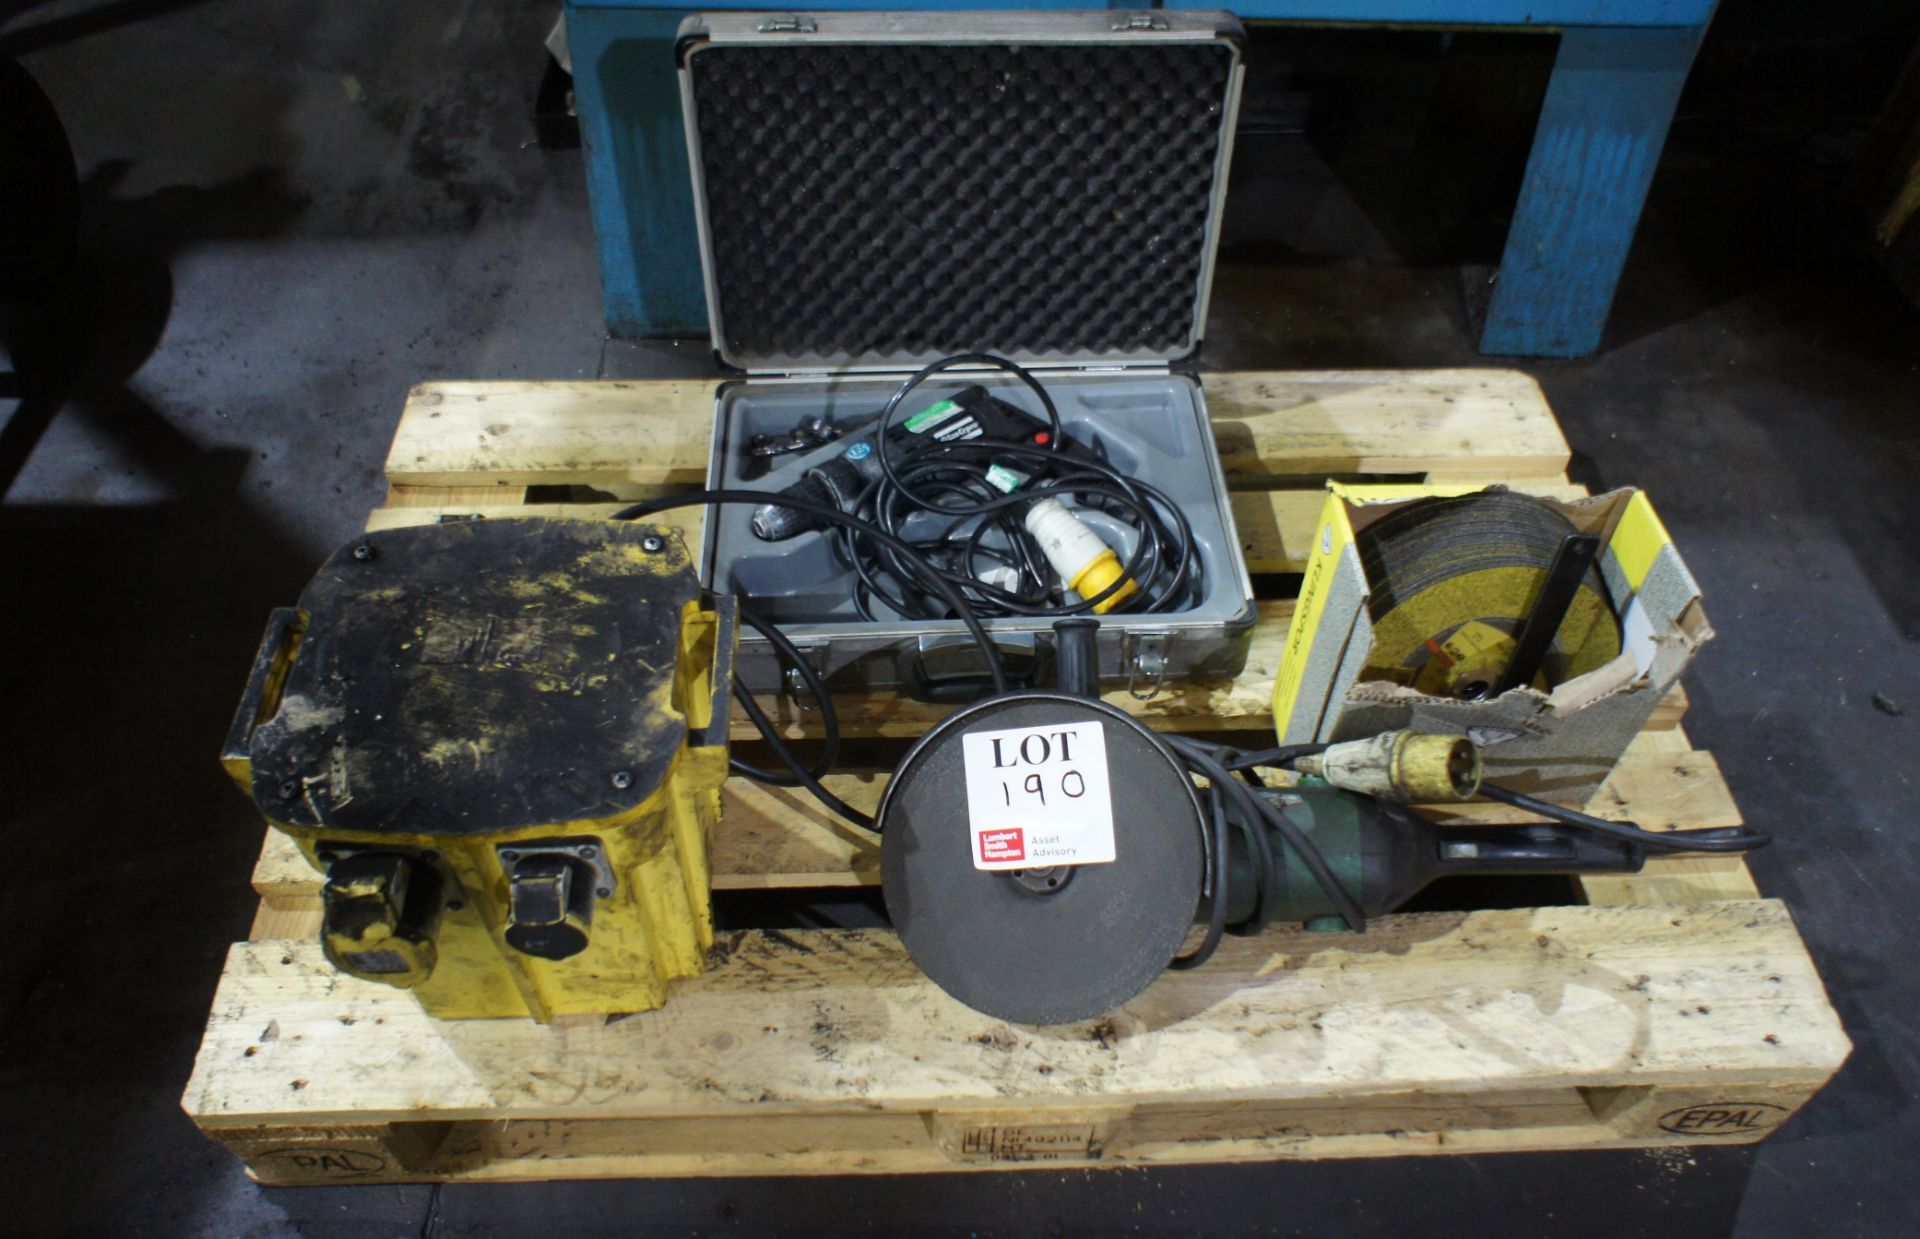 5kVA 110v tool transformer, Atlas Copco drill with Hitachi G23SE 9" angle grinder